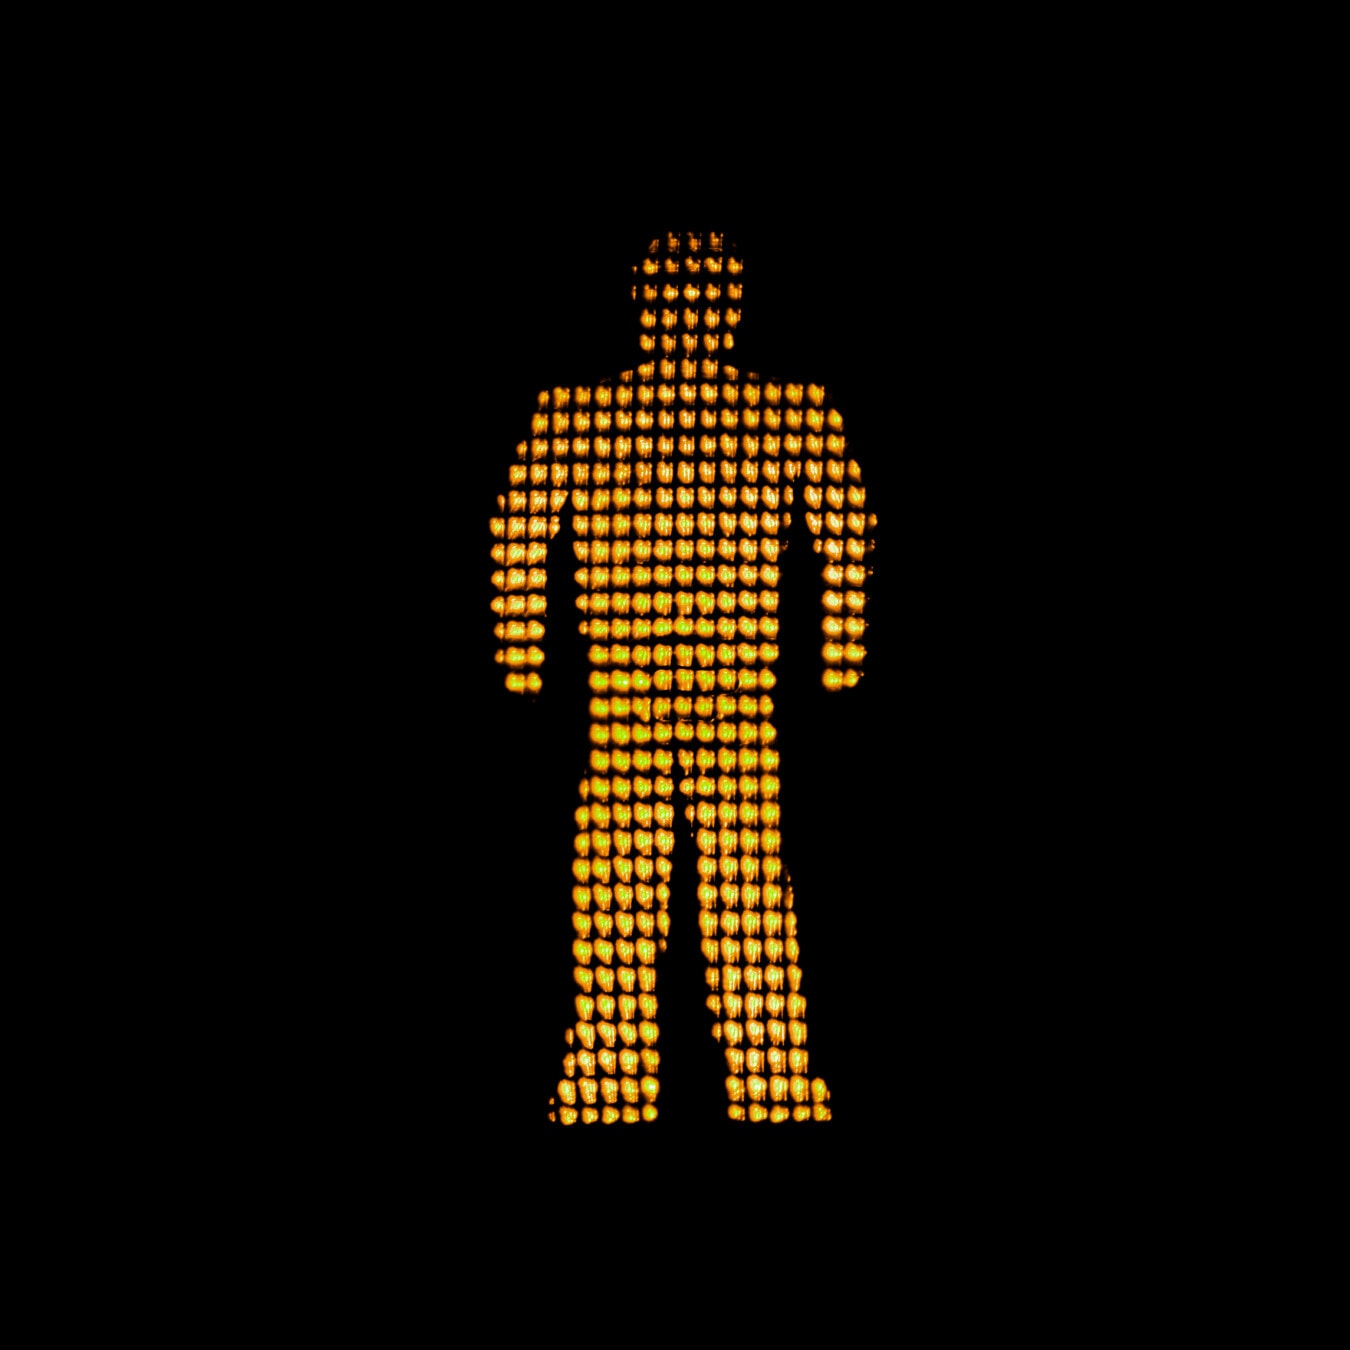 lys, Semaforen, gul, trafiklys, trafik, trafik kontrol, sort, grafisk, symbol, tegn